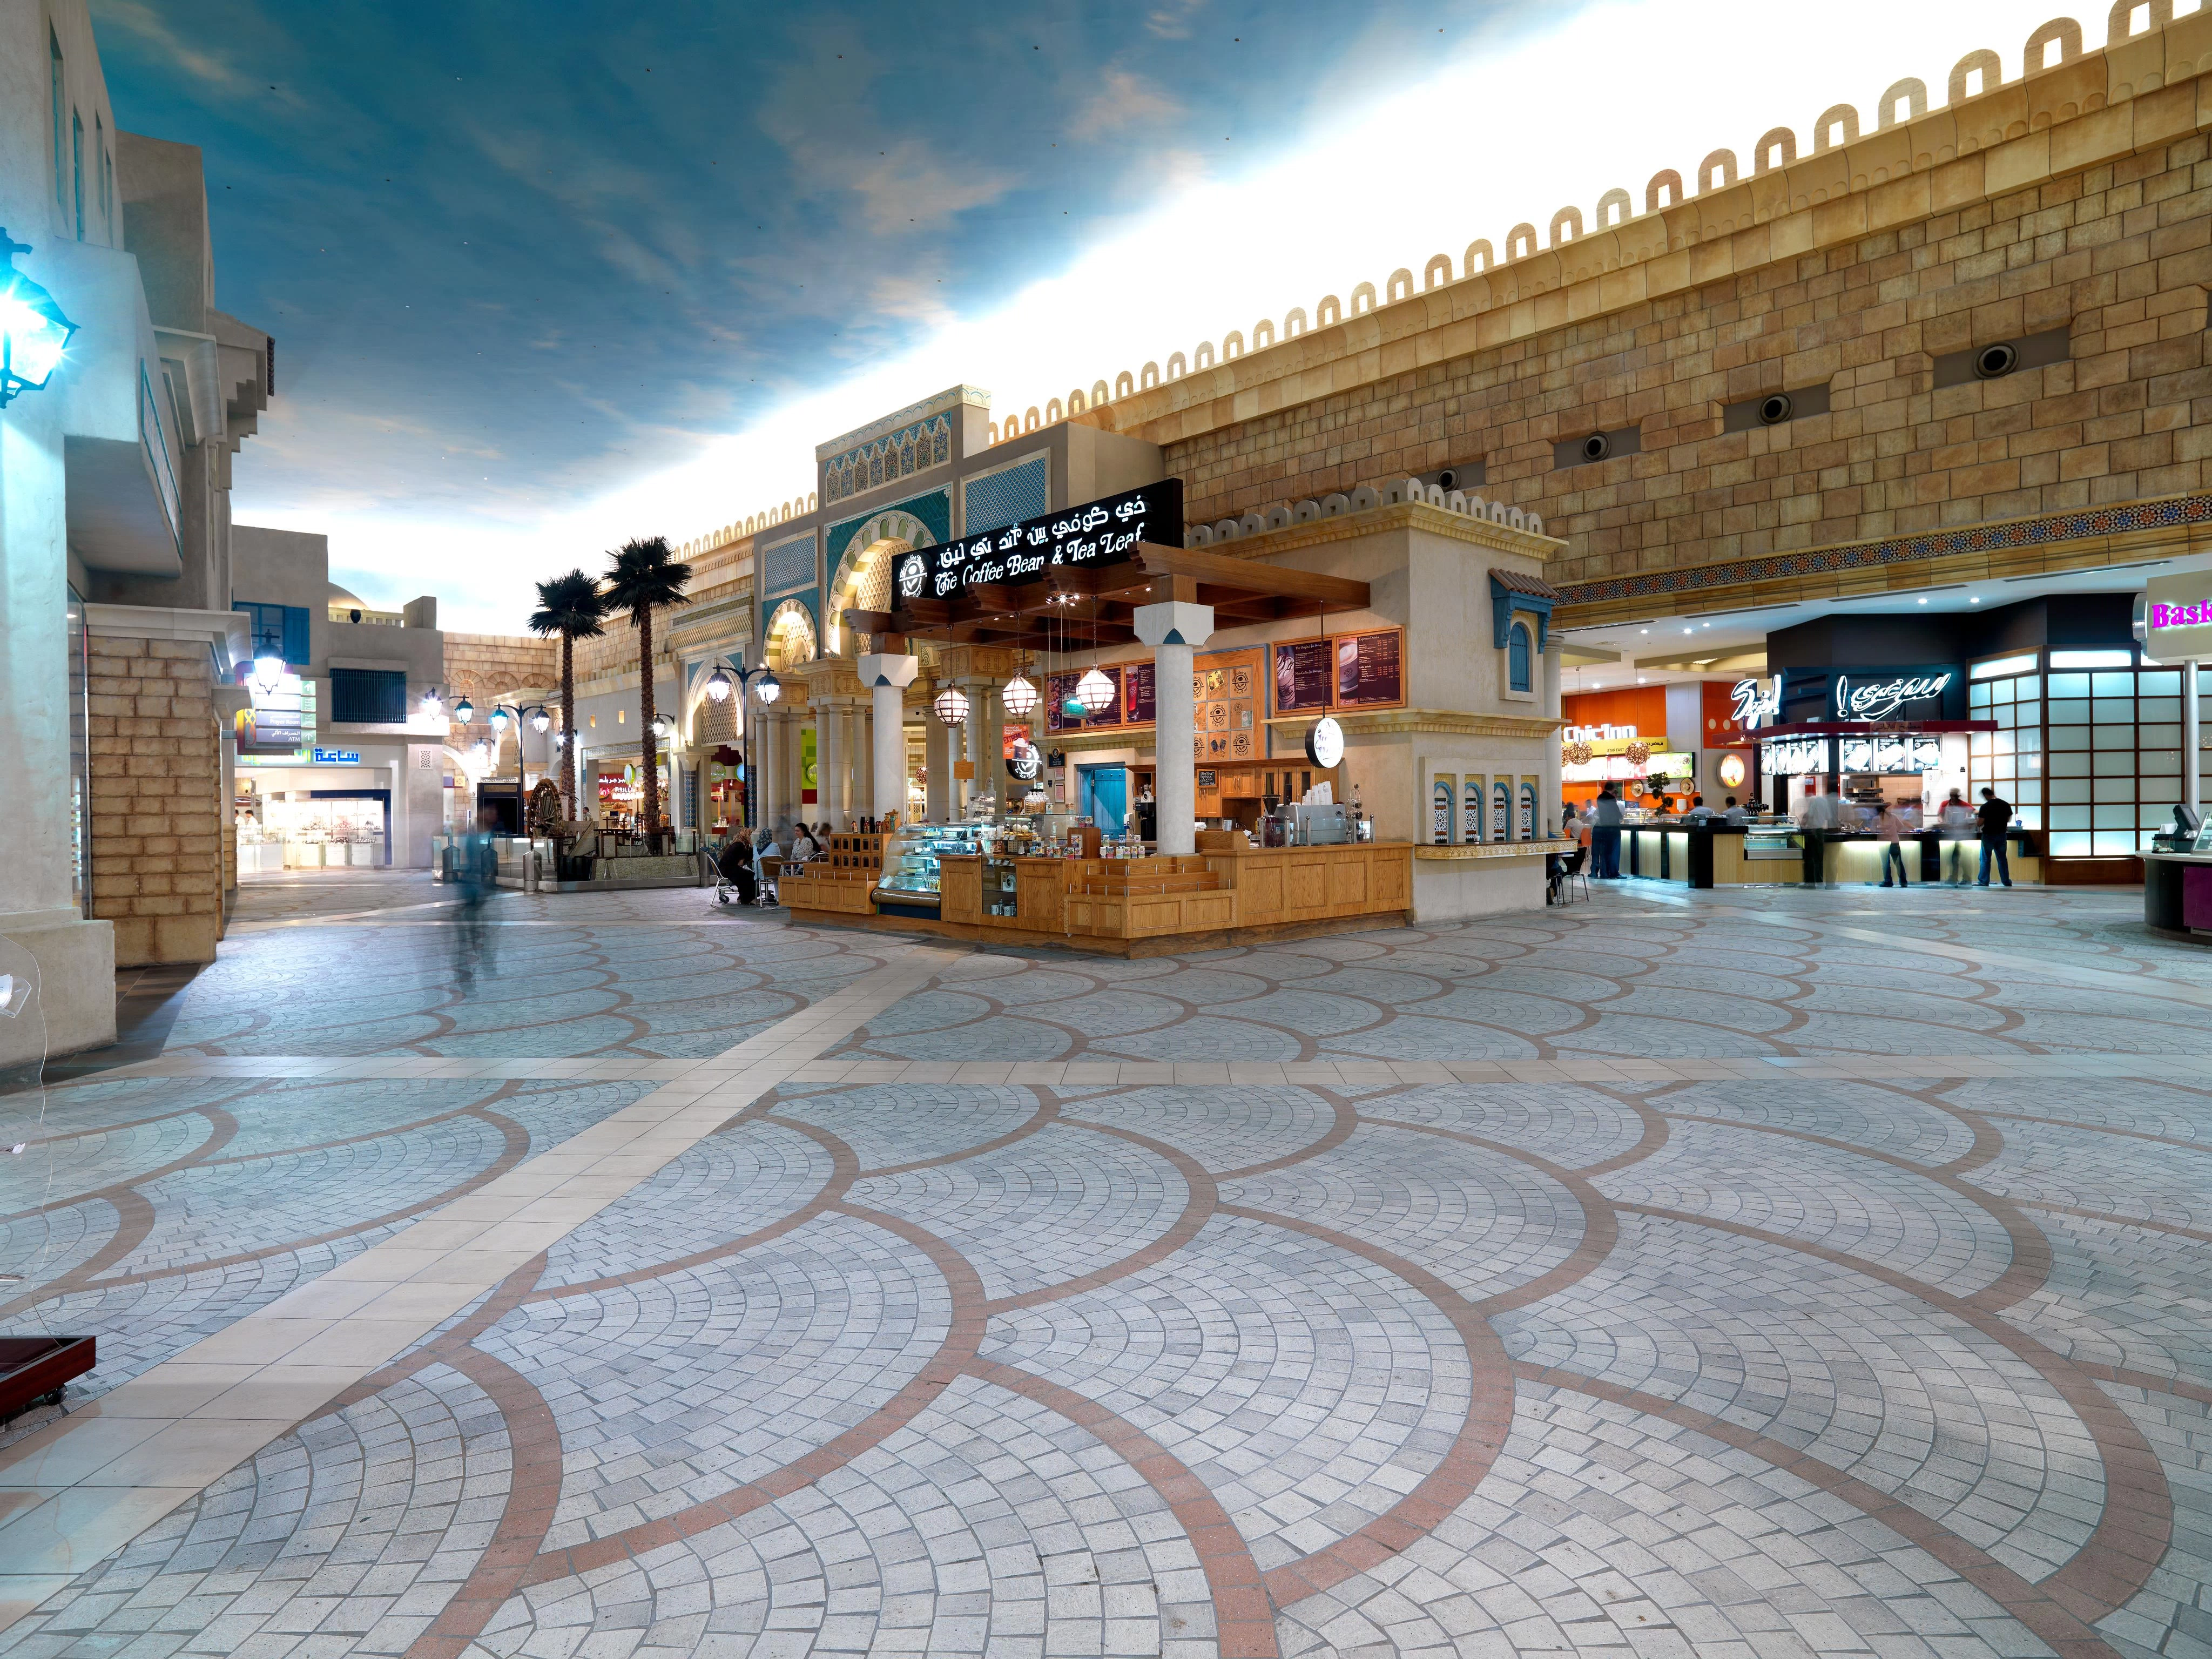 AtlasConcorde IBN Battuta Mall UAE 008